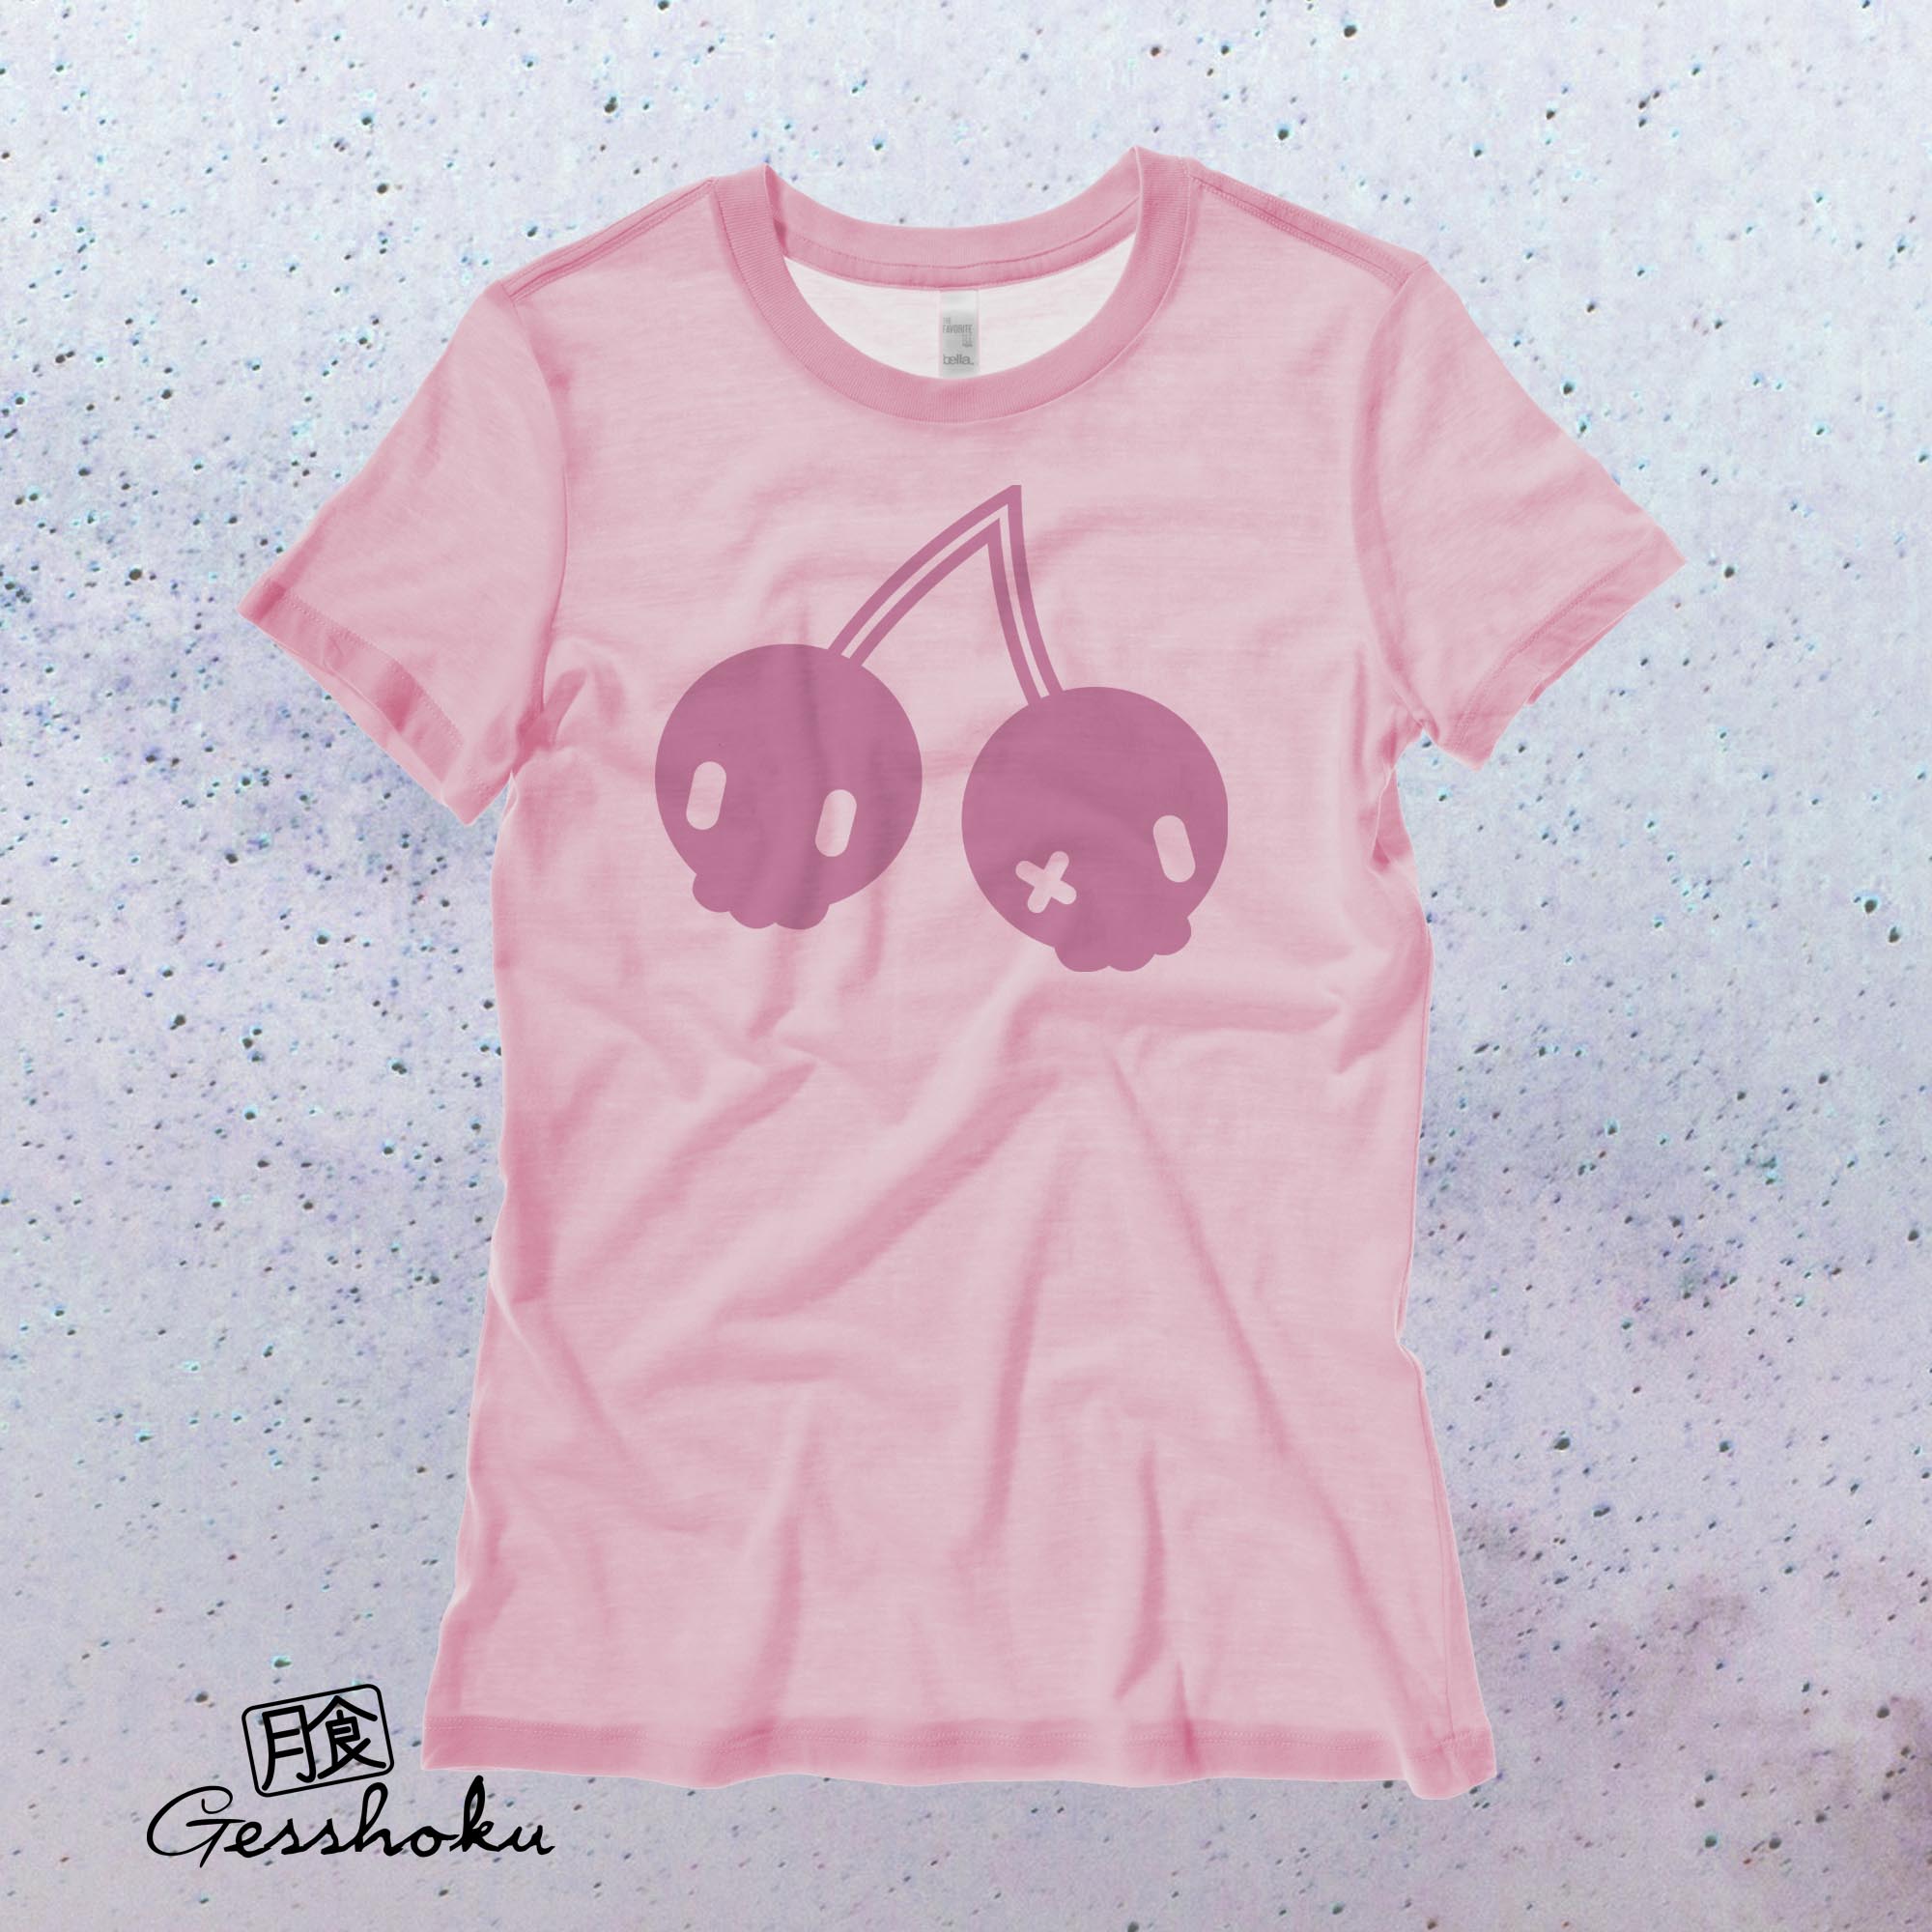 Cherry Skulls Ladies T-shirt - Light Pink